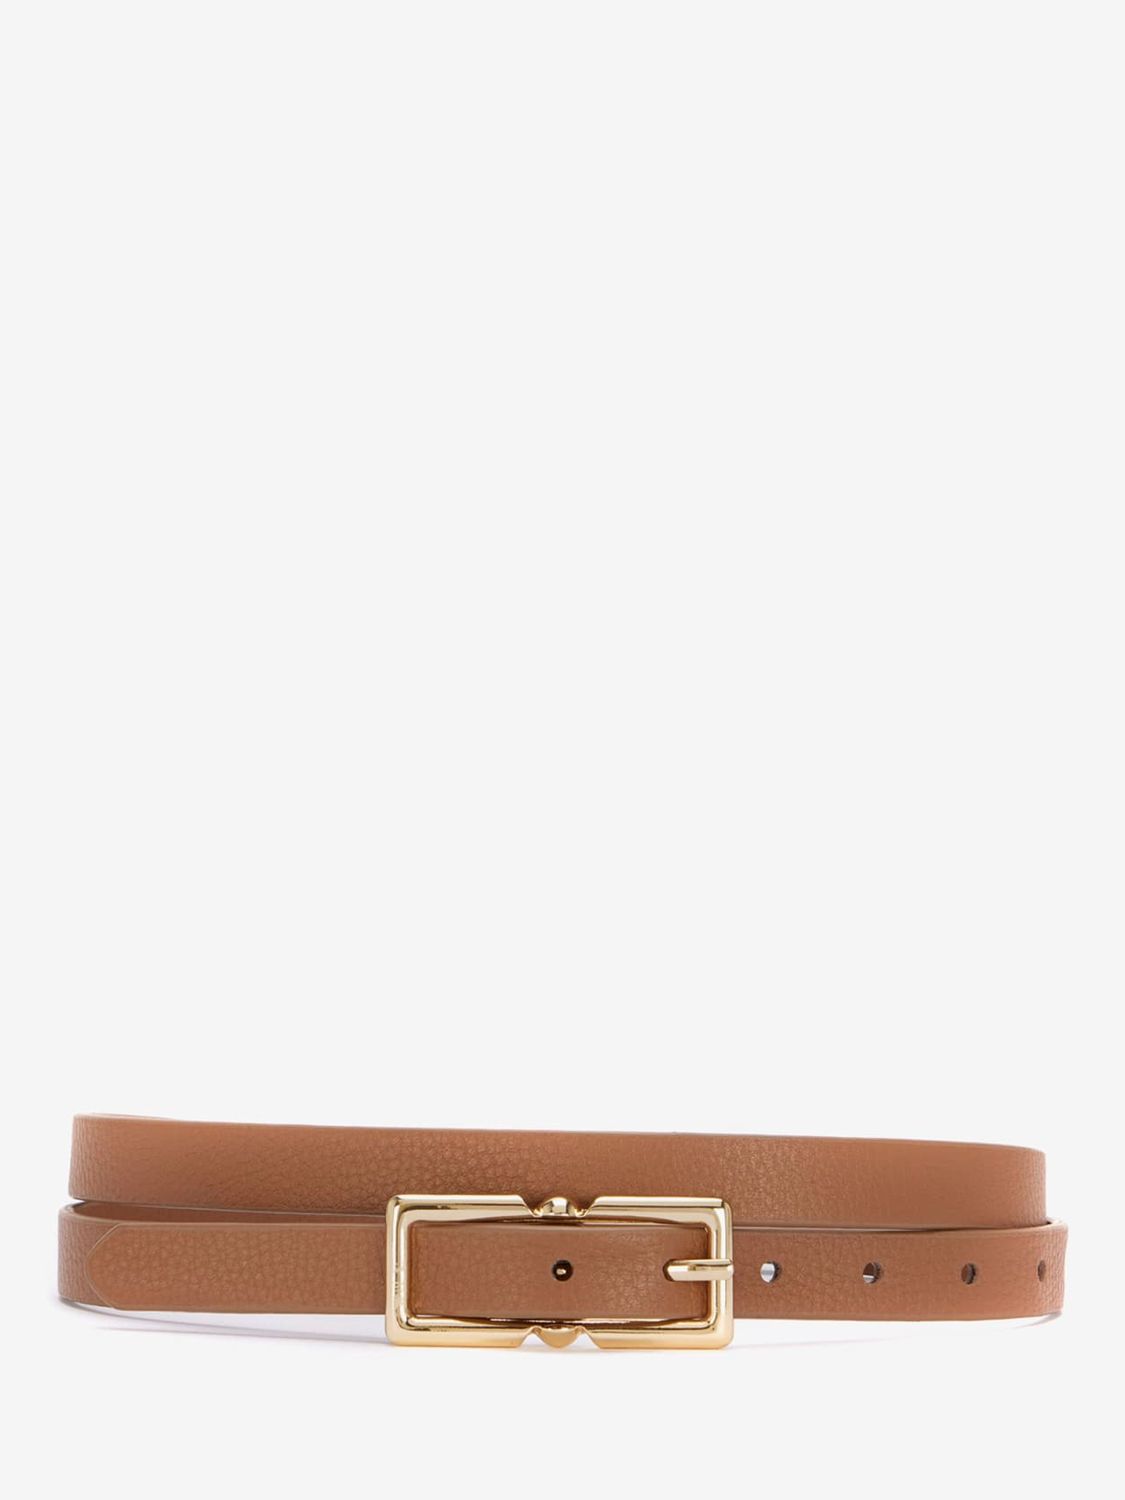 Women's Plus Size 2X Brown Braided Belt Genuine Leather 1 3/4 Wide